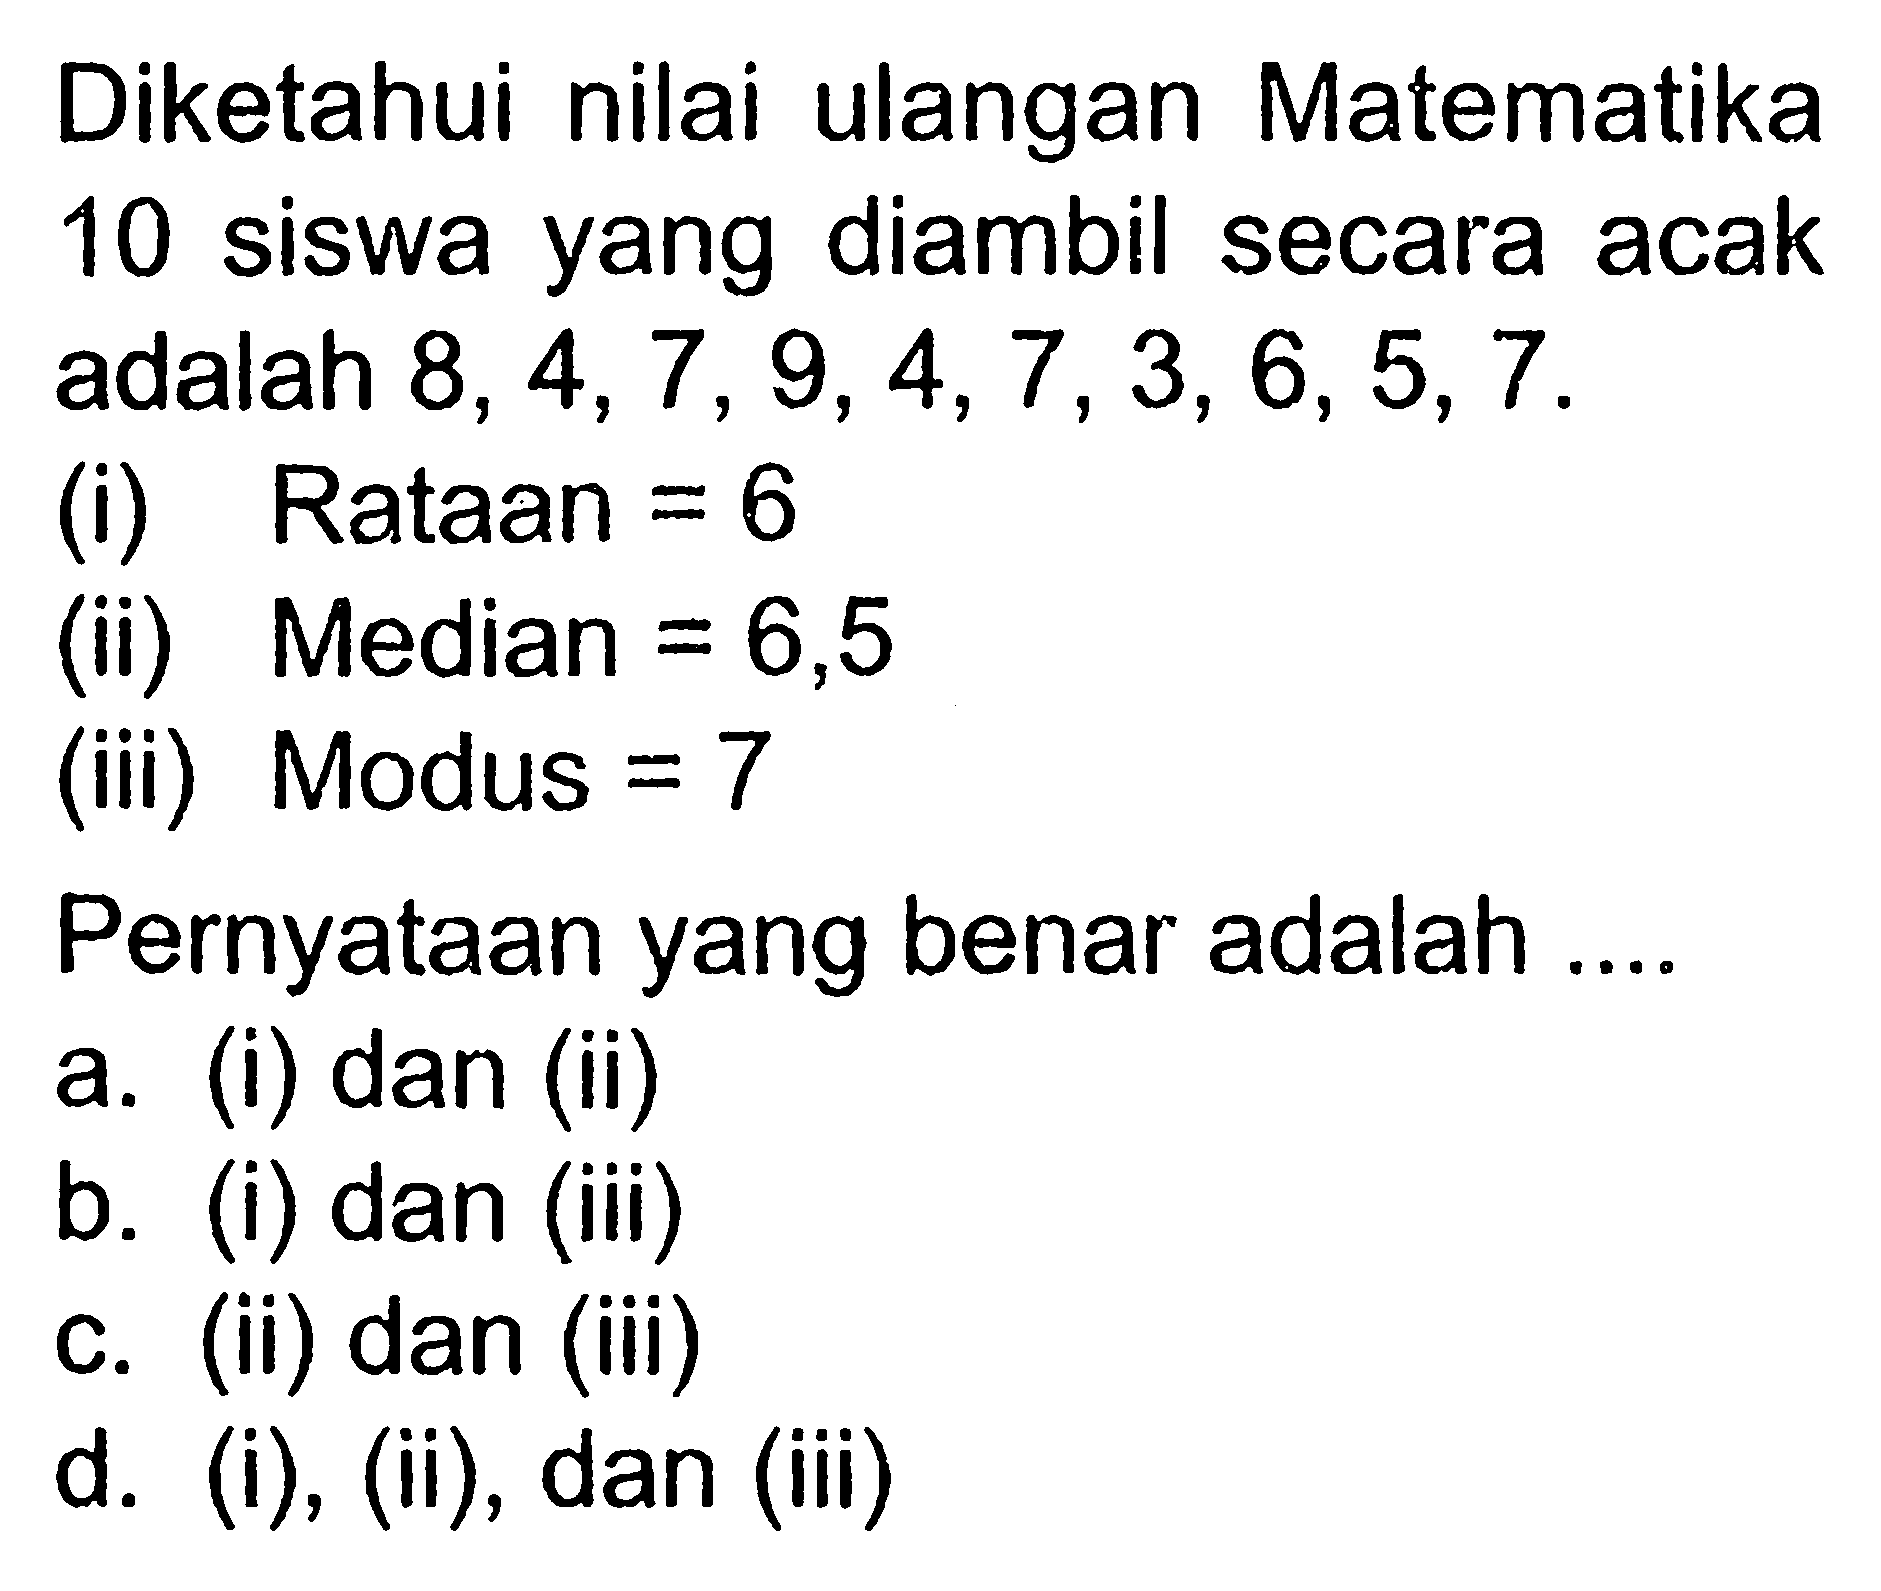 Diketahui nilai ulangan Matematika 10 siswa yang diambil secara acak adalah  8,4,7,9,4,7,3,6,5,7 (i) Rataan  =6  (ii) Median  =6,5  (iii) Modus  =7 Pernyataan yang benar adalah ....